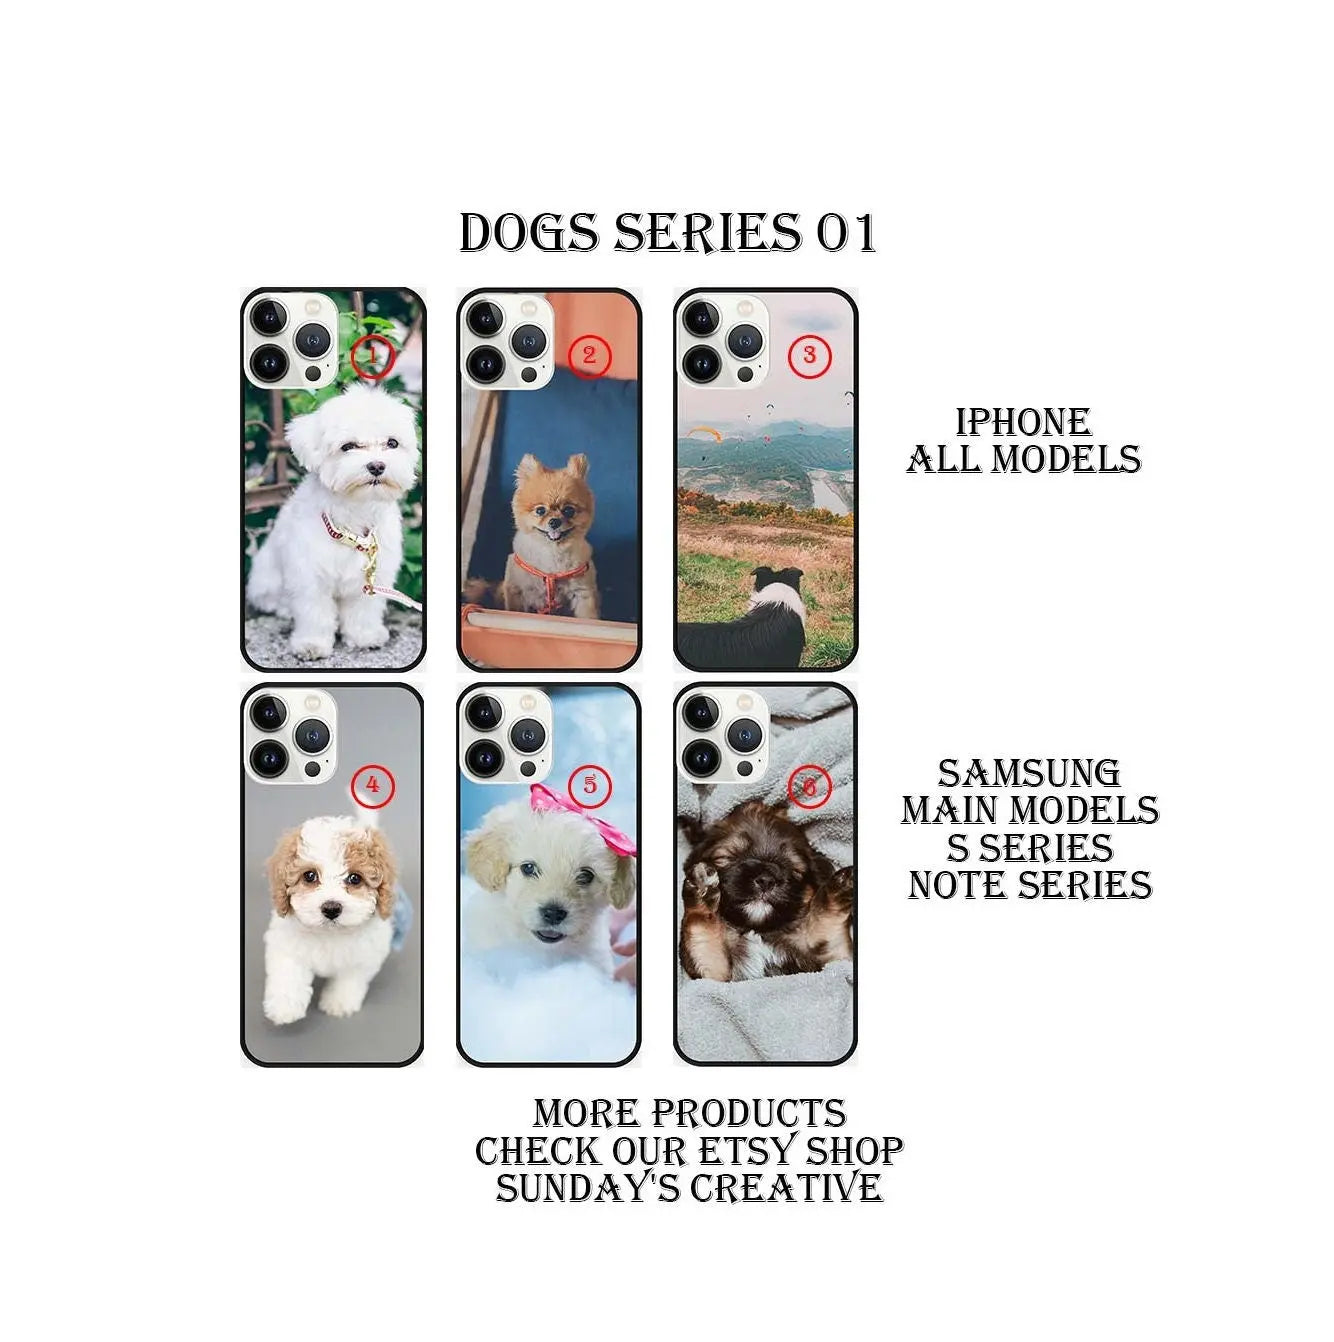 Designed phone cases  Dog series 01 Sunday's Creative